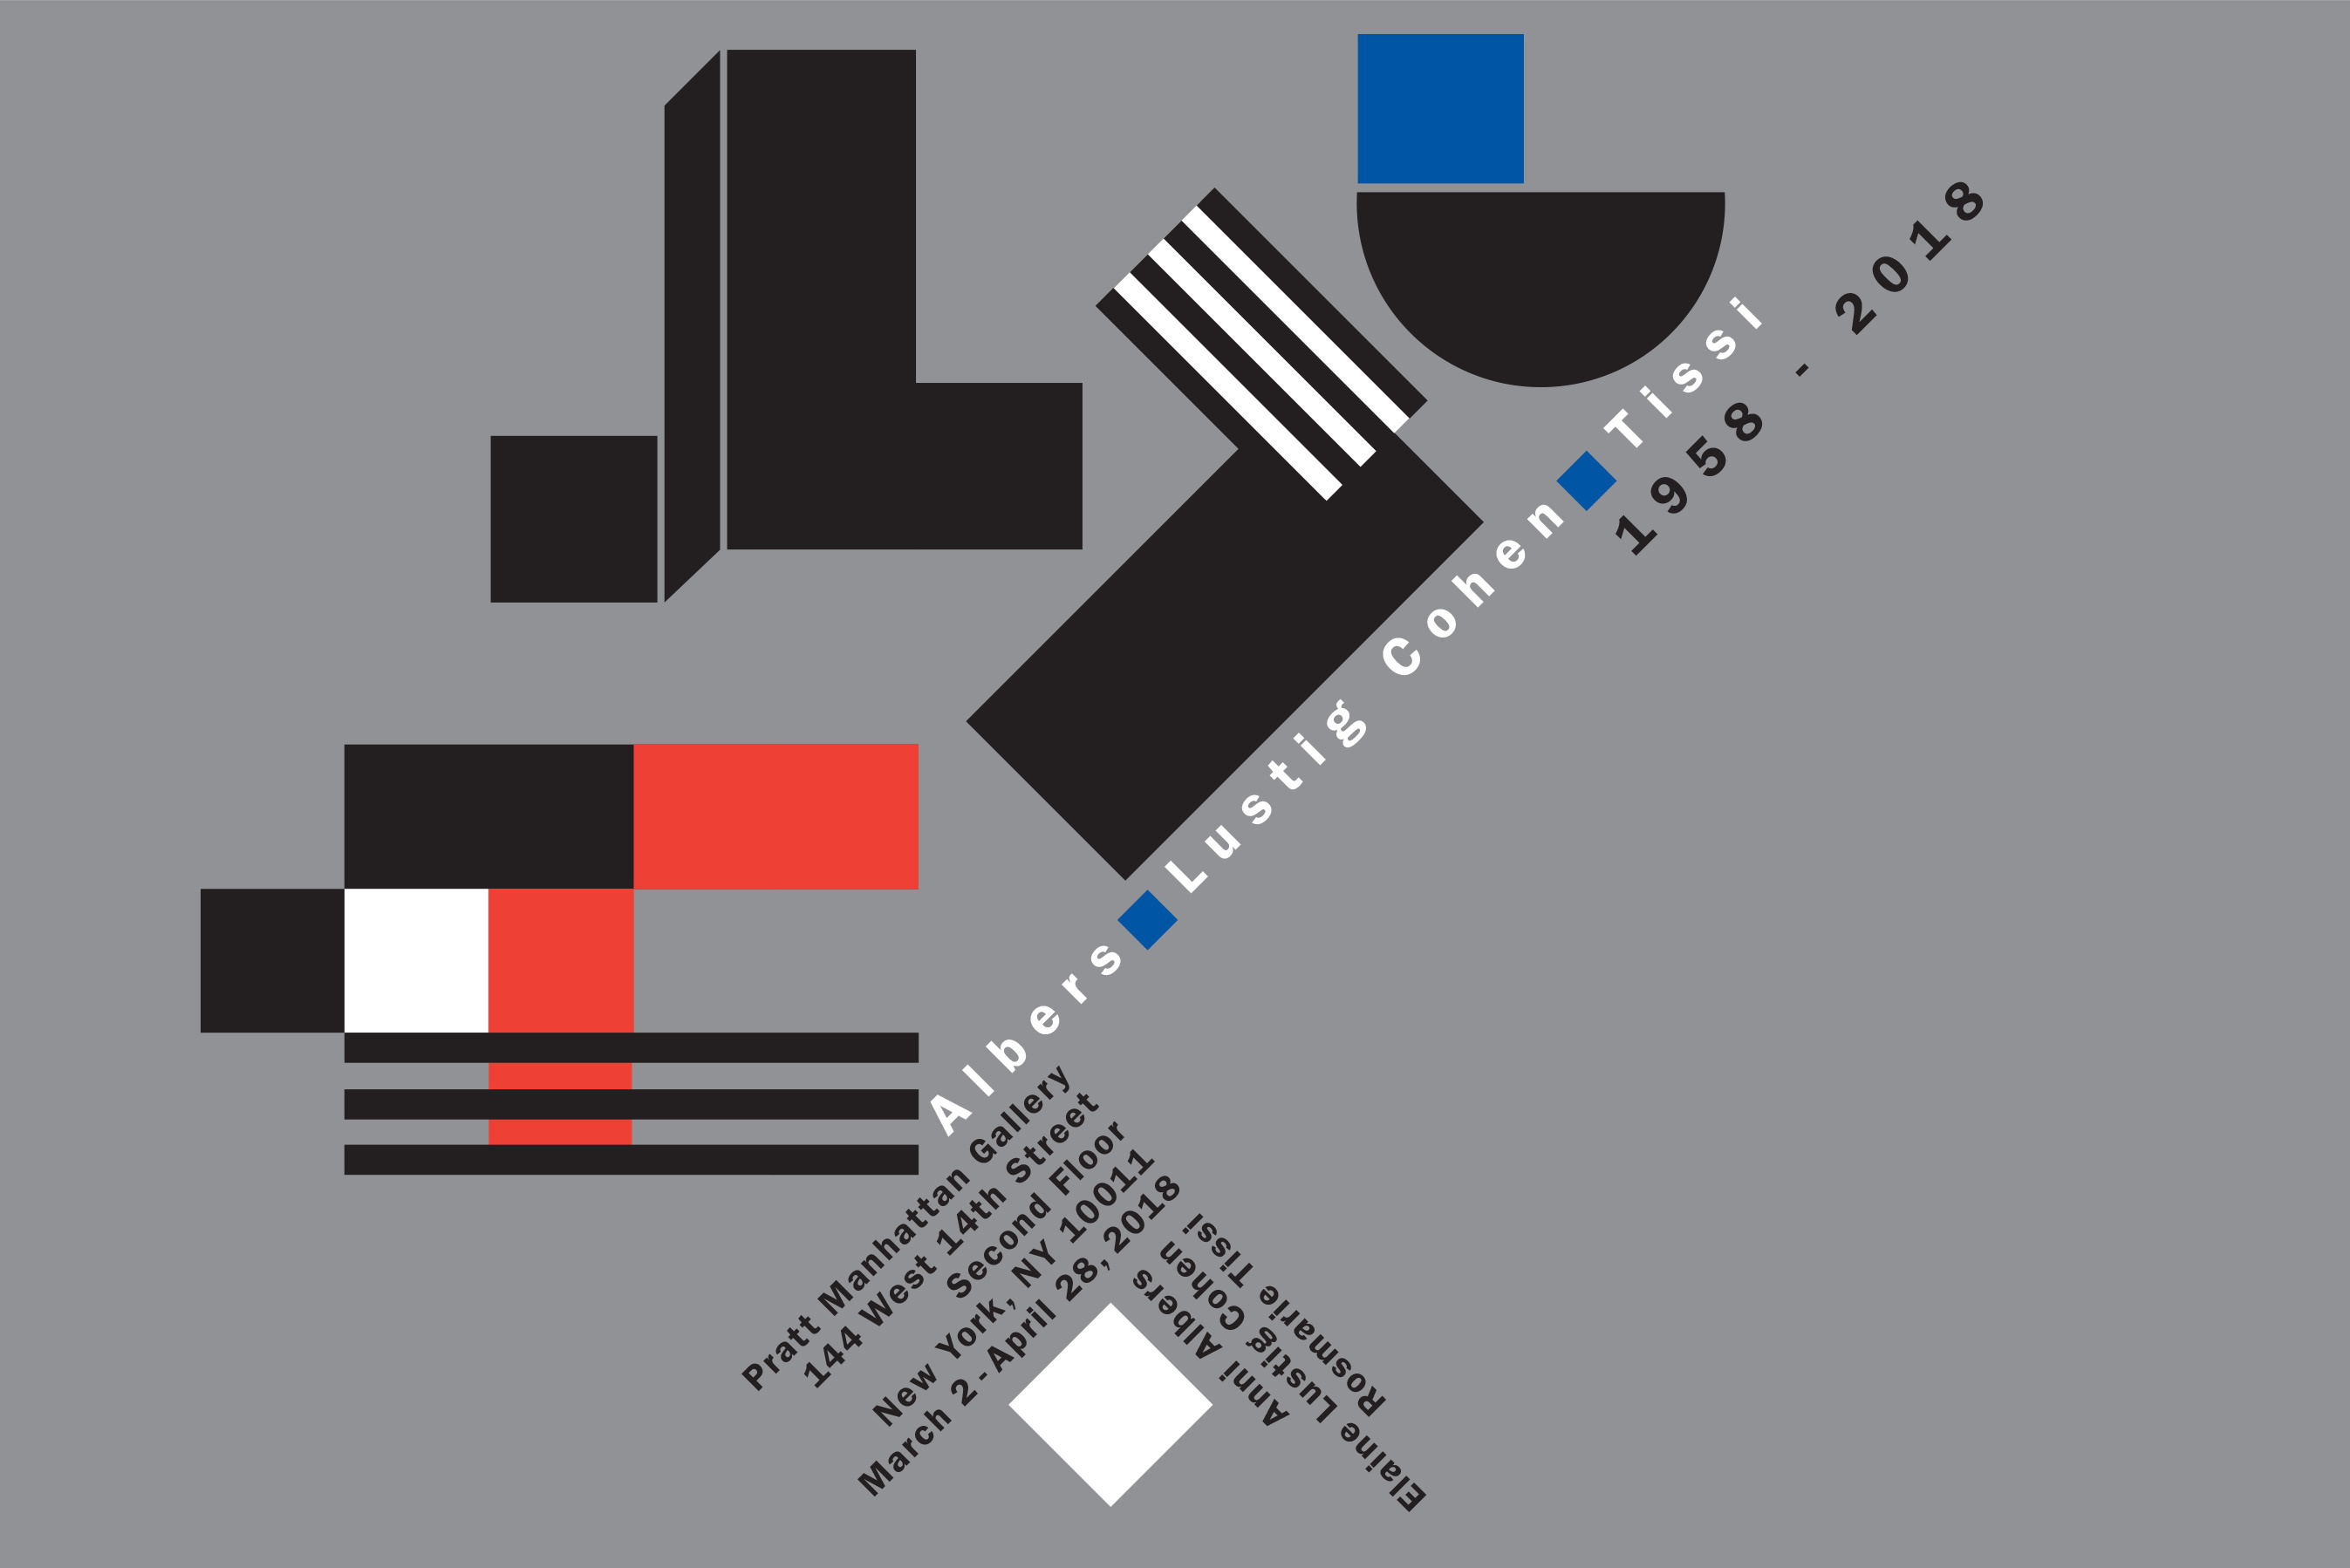 Rosmarie Tissi, 2018, poster design for Albers, Lustig, Cohen, 1958-2018, commissioned by Pratt Institute. (Image via Pratt Institute)